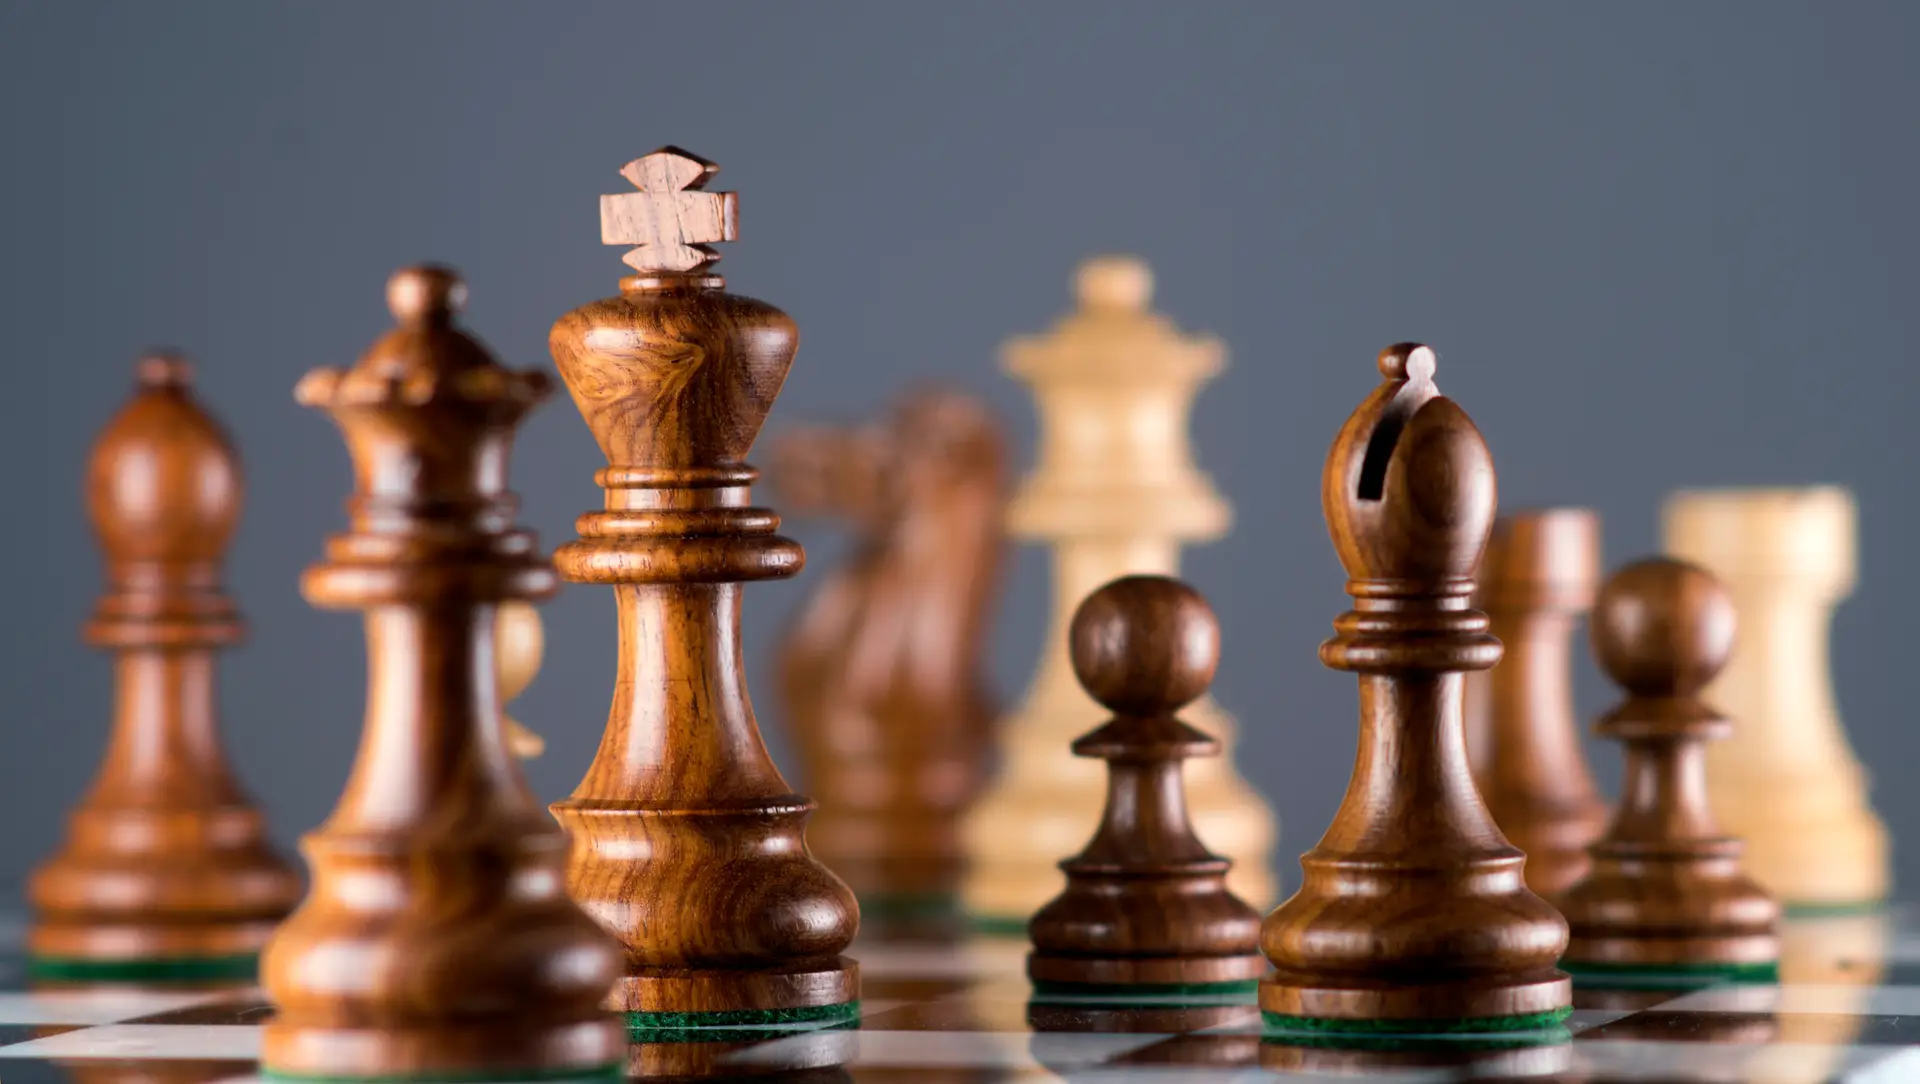 25 ideias de Xadrez  xadrez, aprender a jogar xadrez, exemplos de